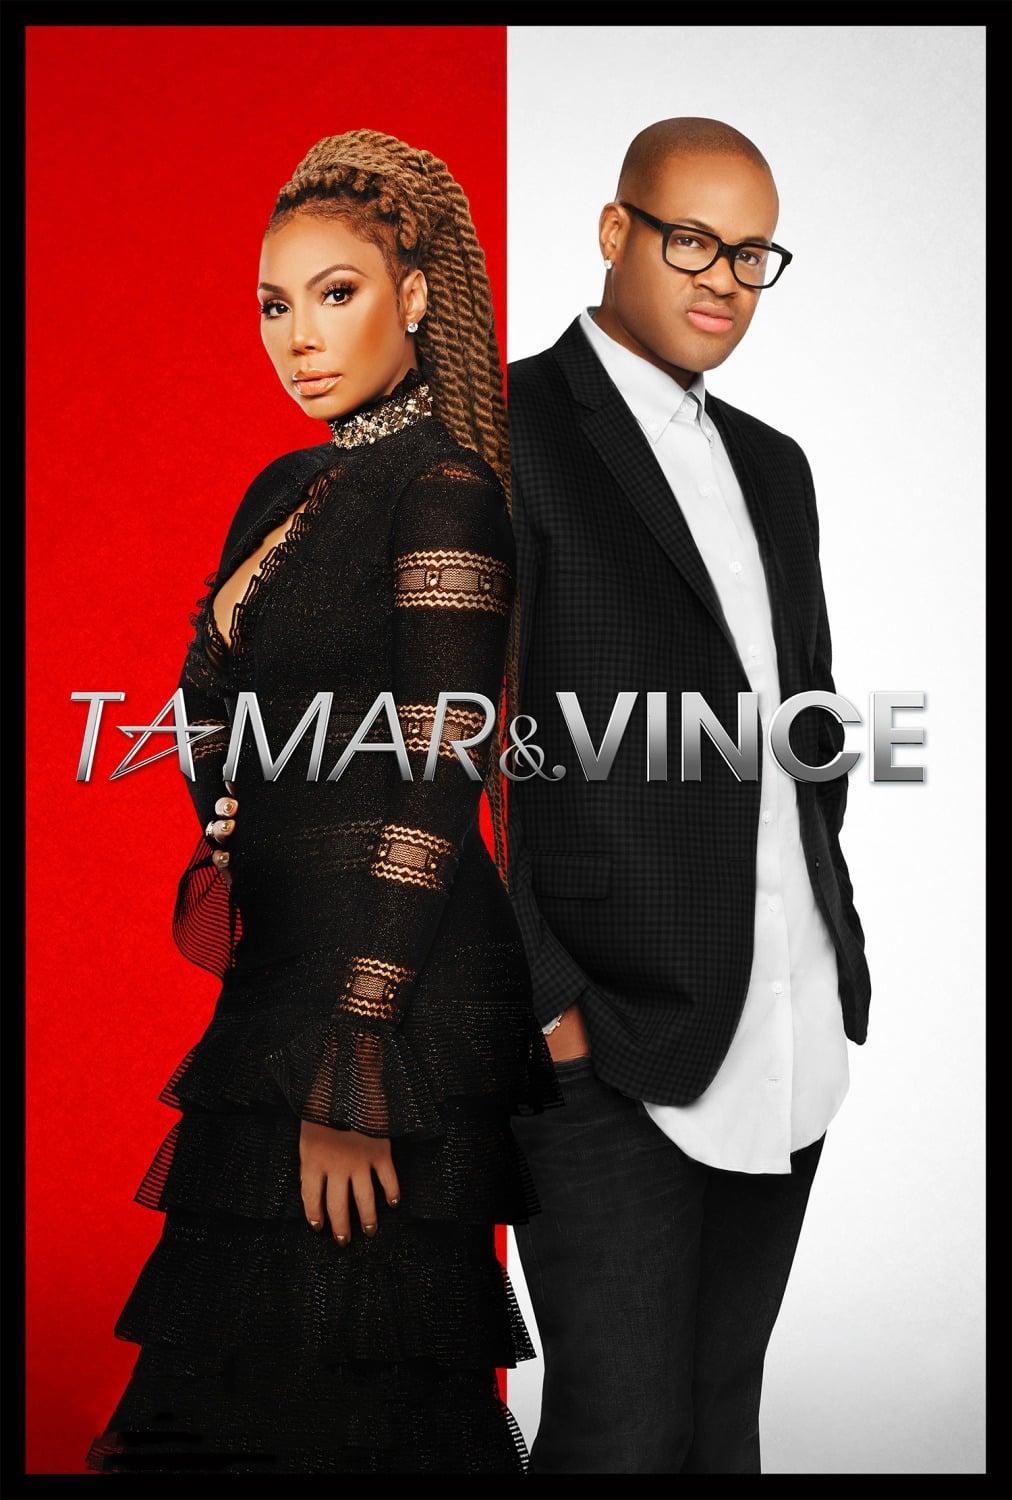 Tamar & Vince poster